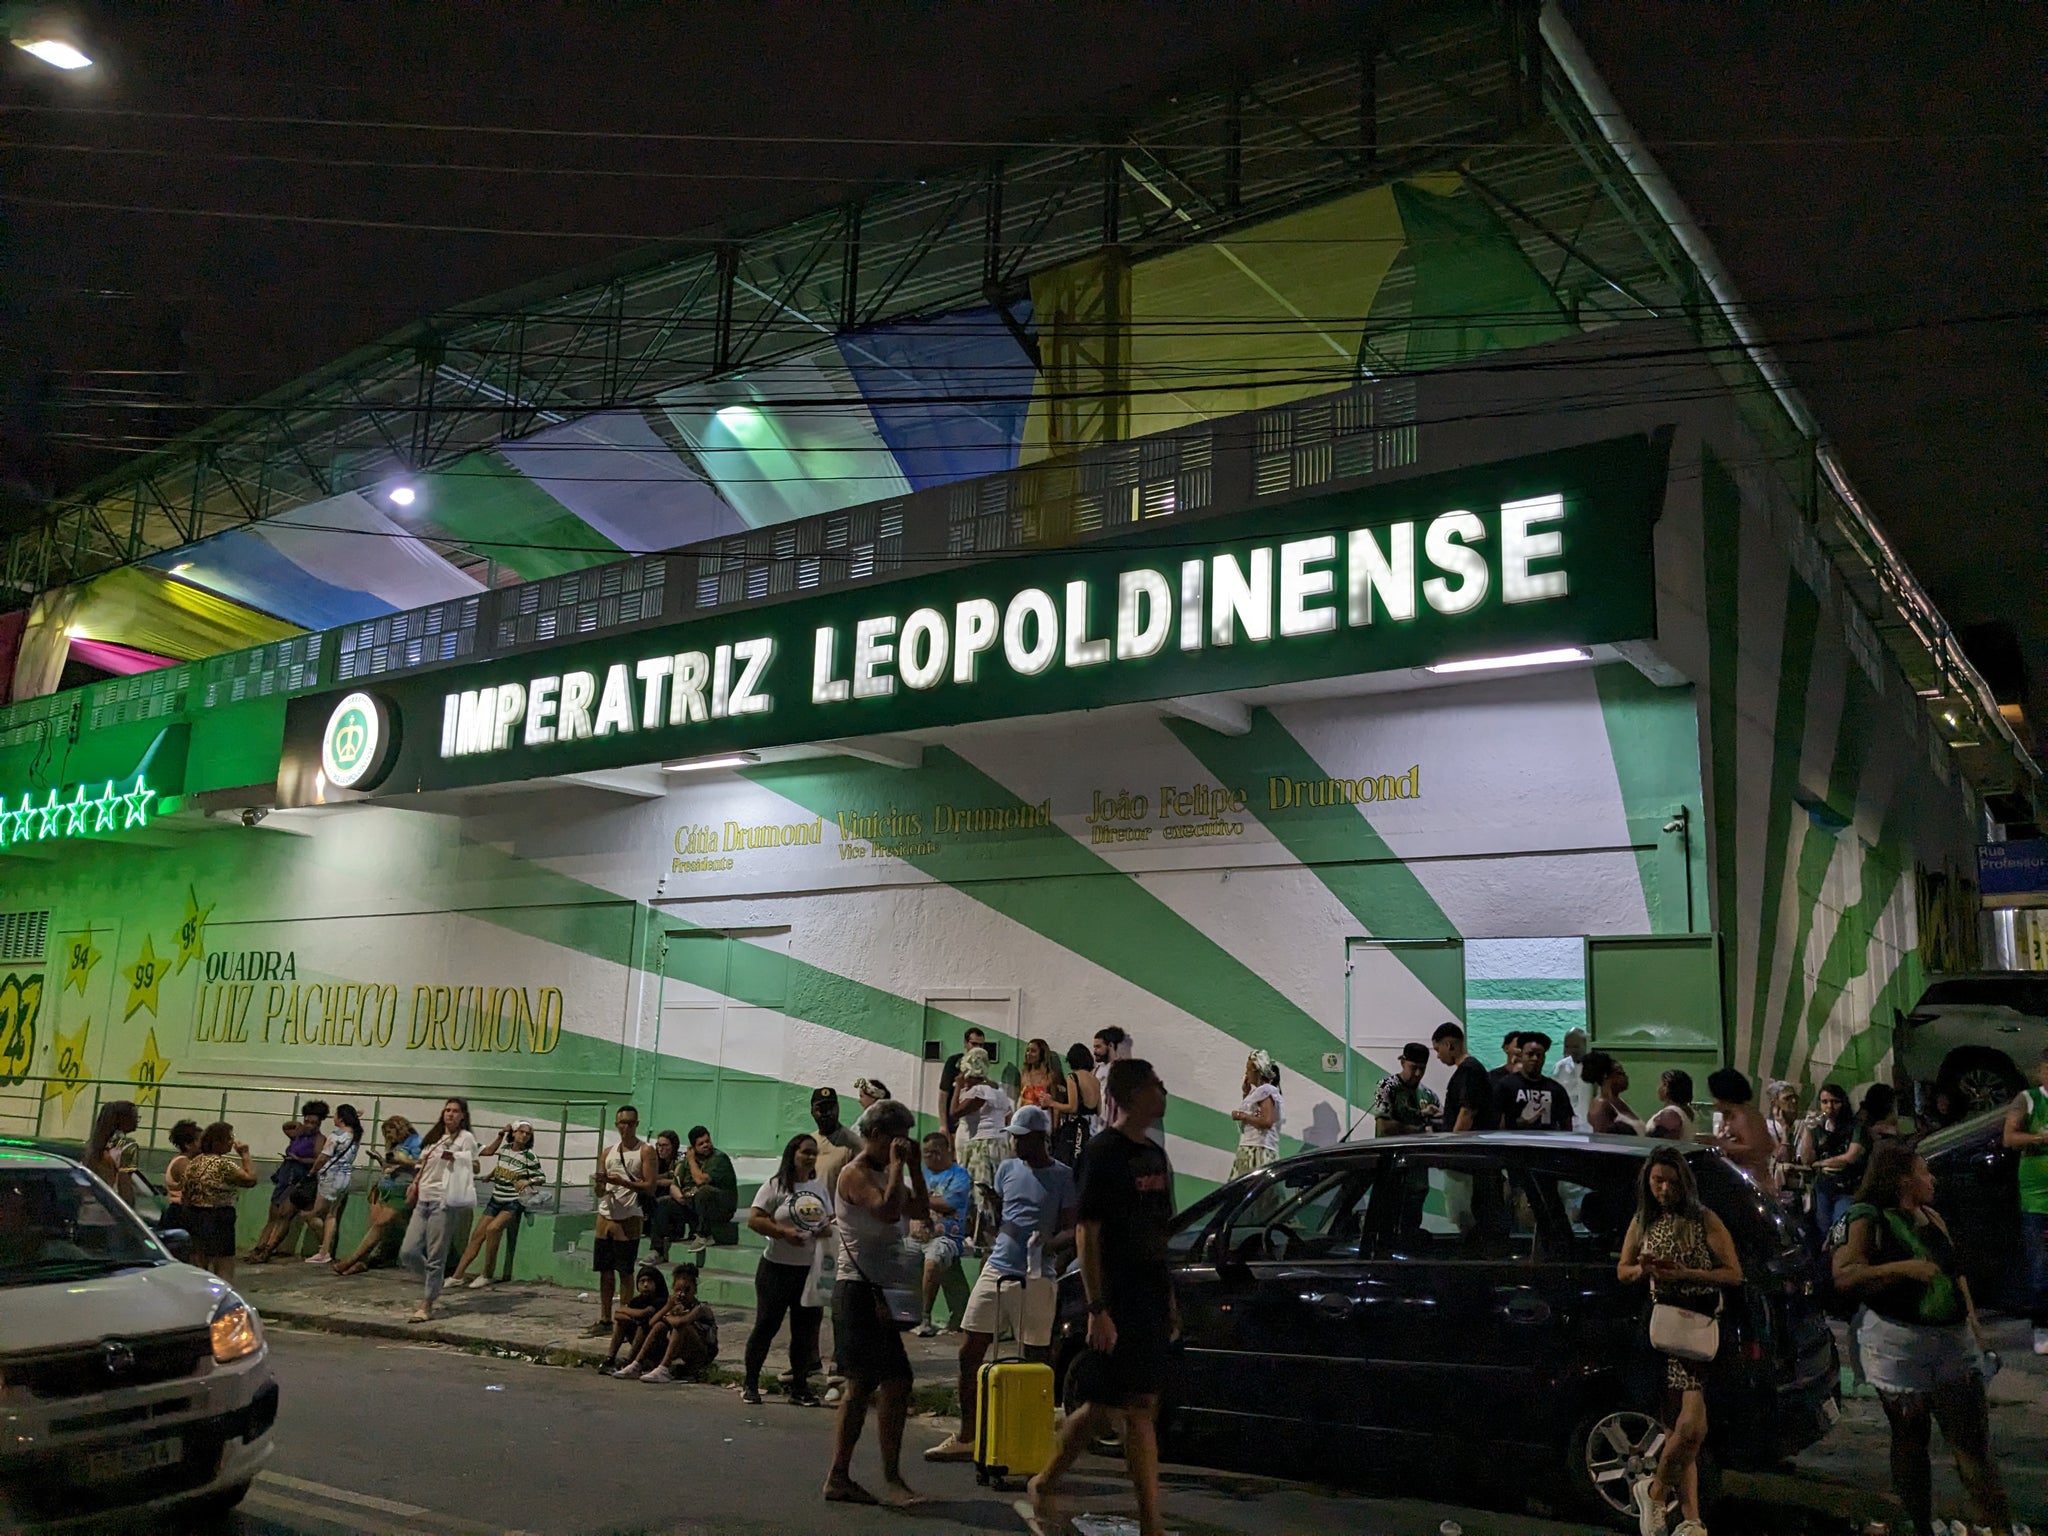 Choosing the Samba at Imperatriz Leopoldinense